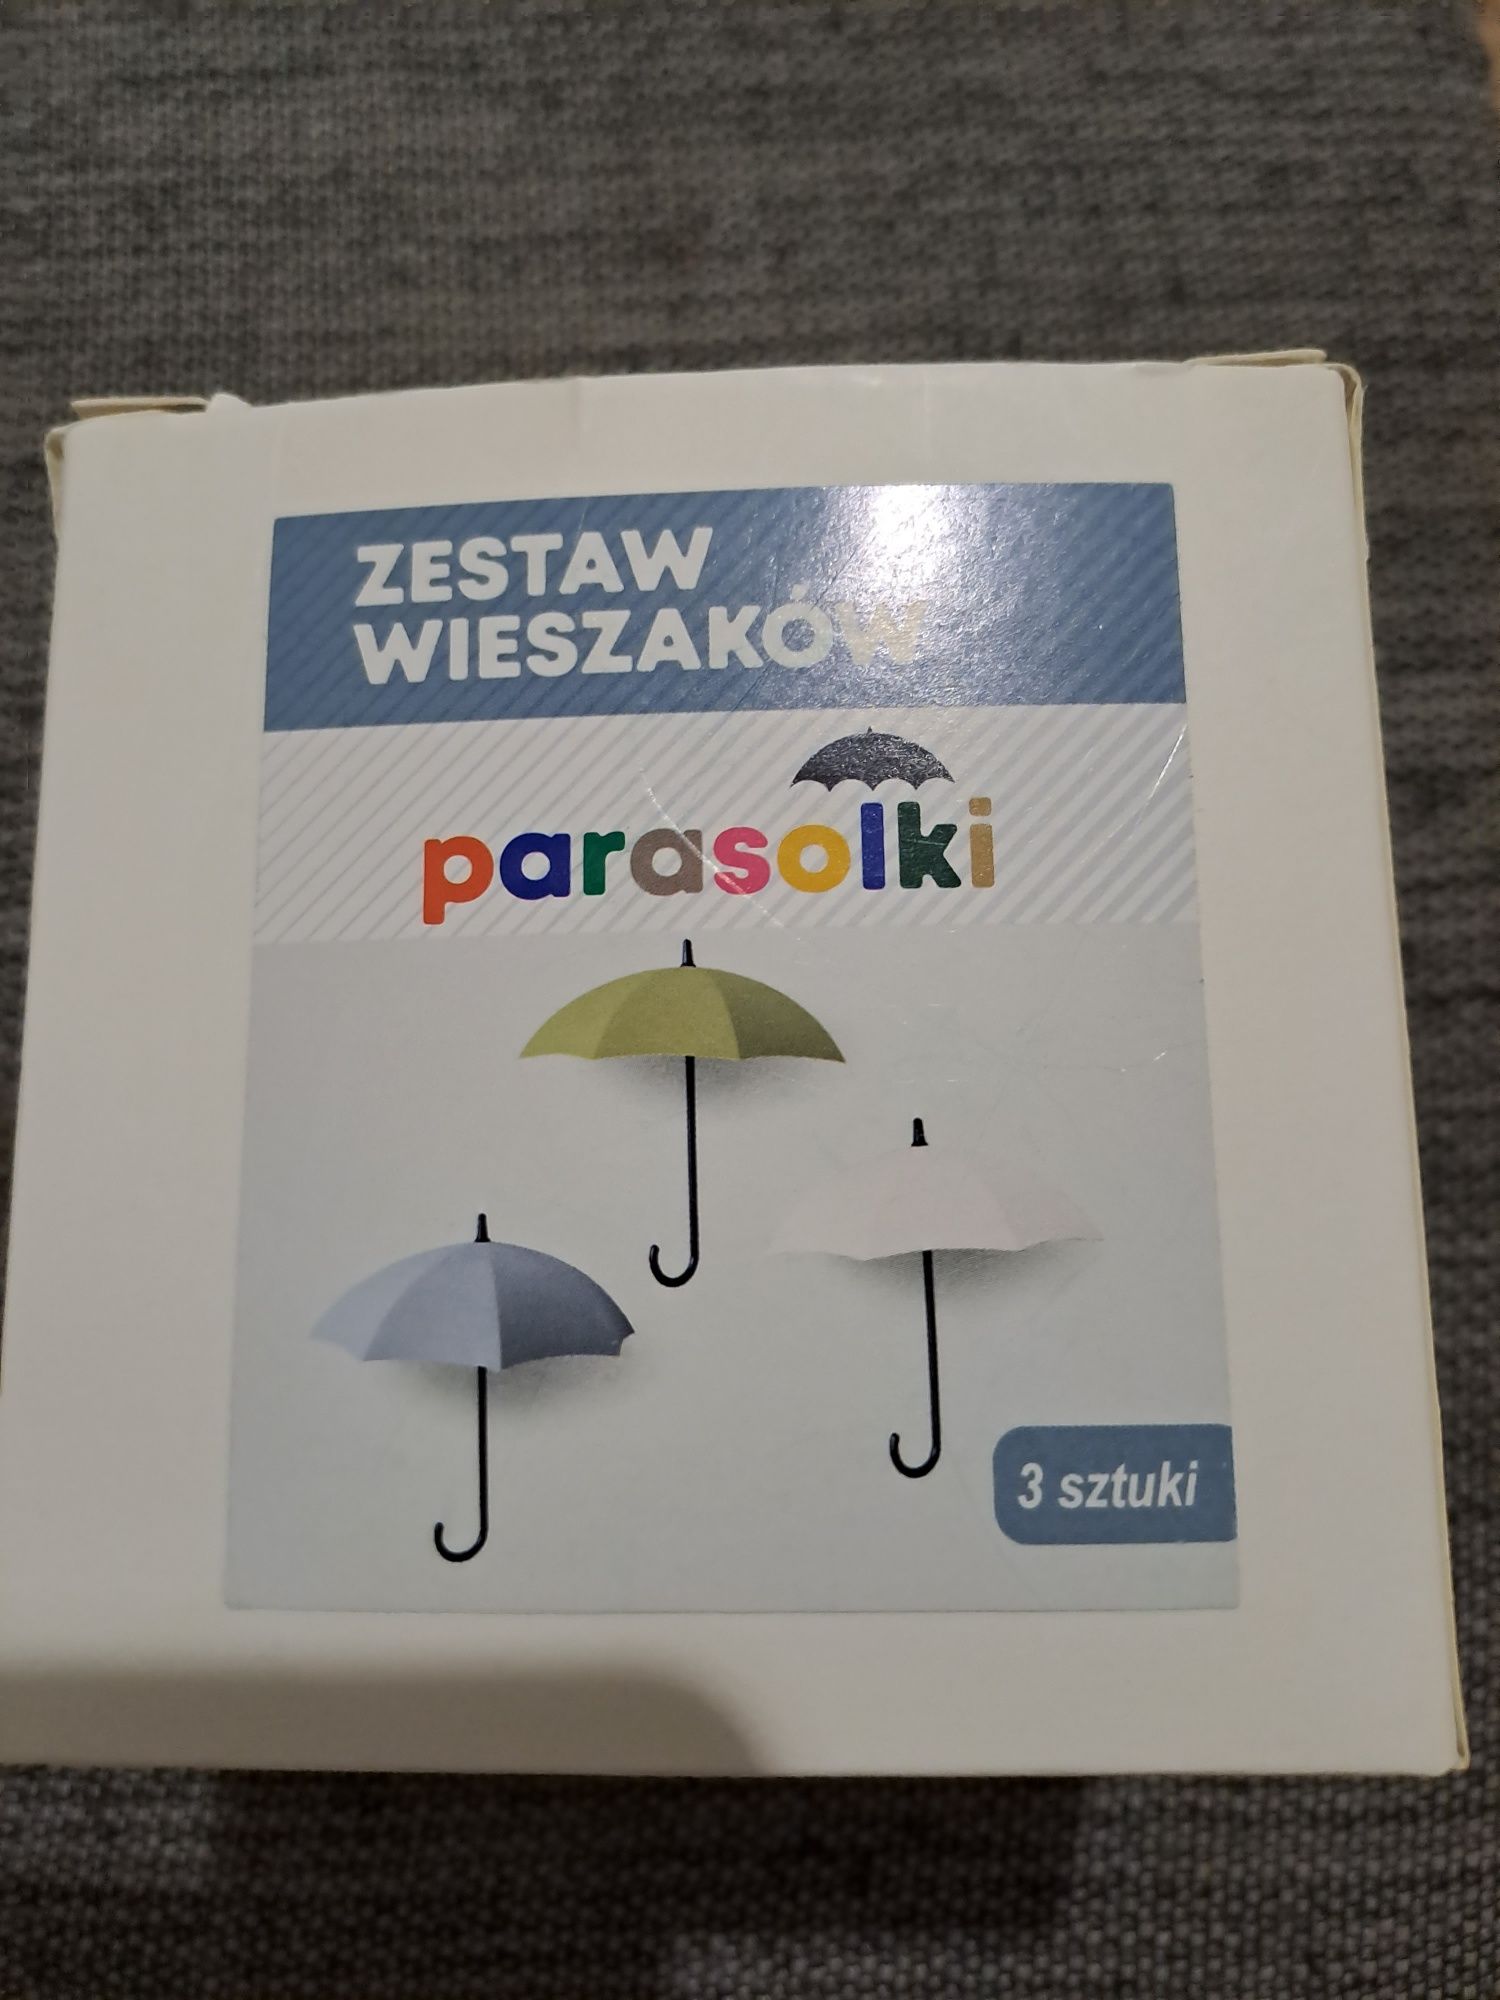 Wieszaki parasolki